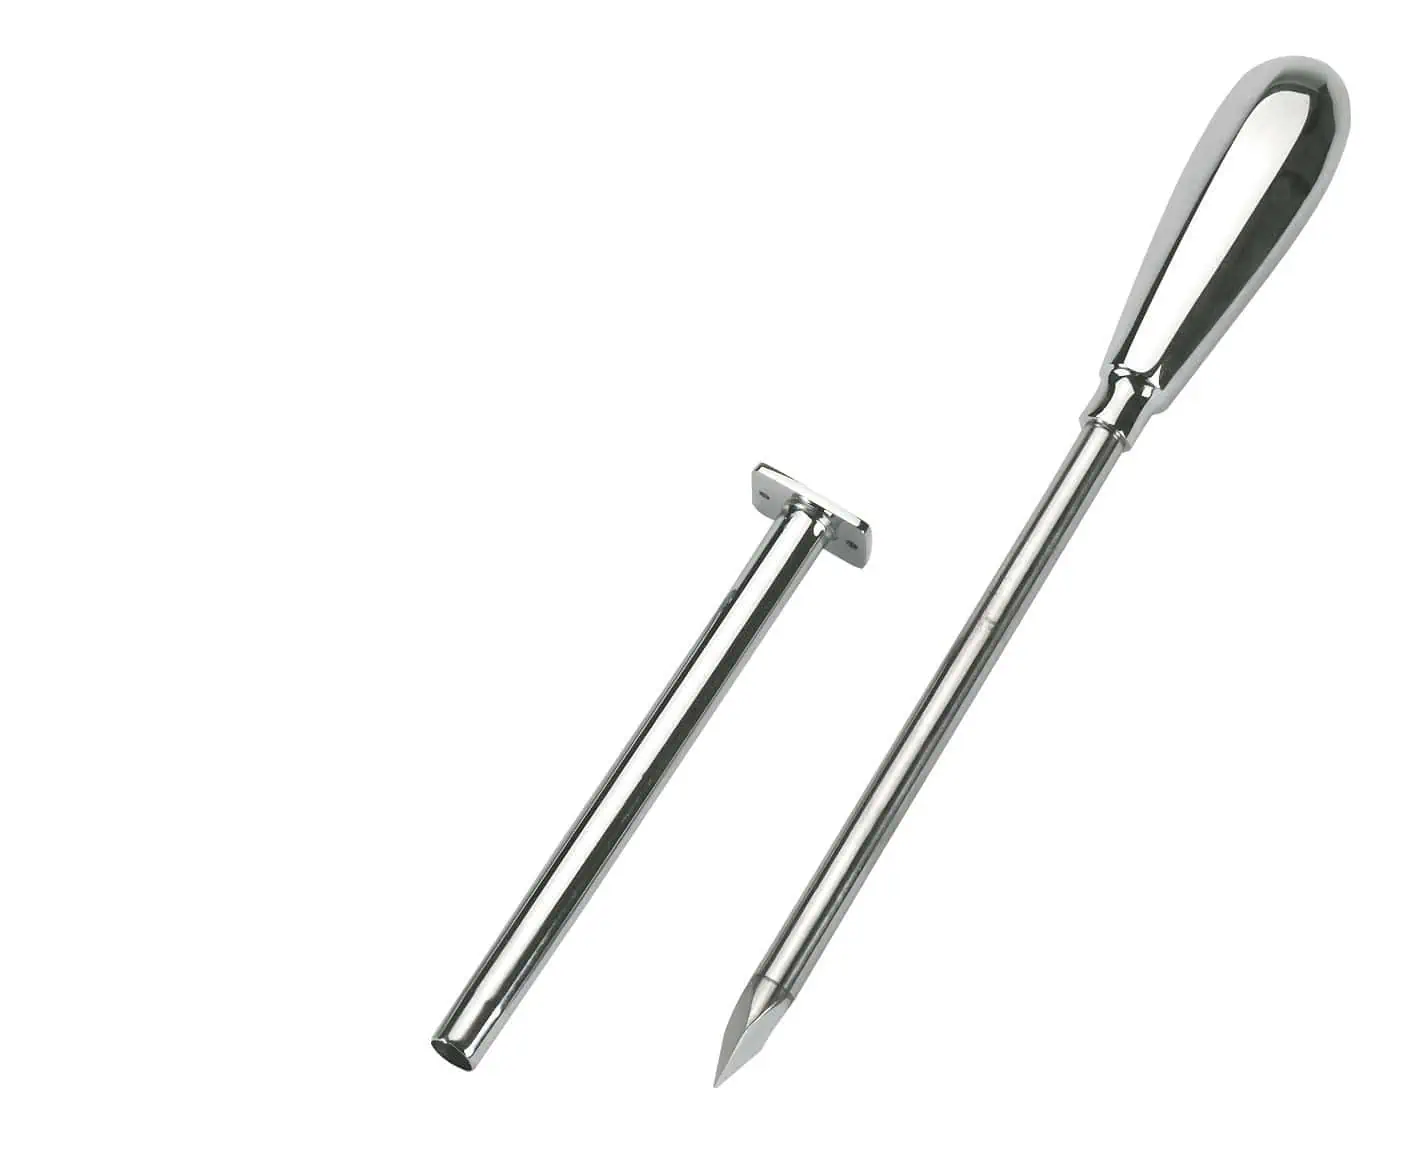 Trocar, metal handle, chrome-plated